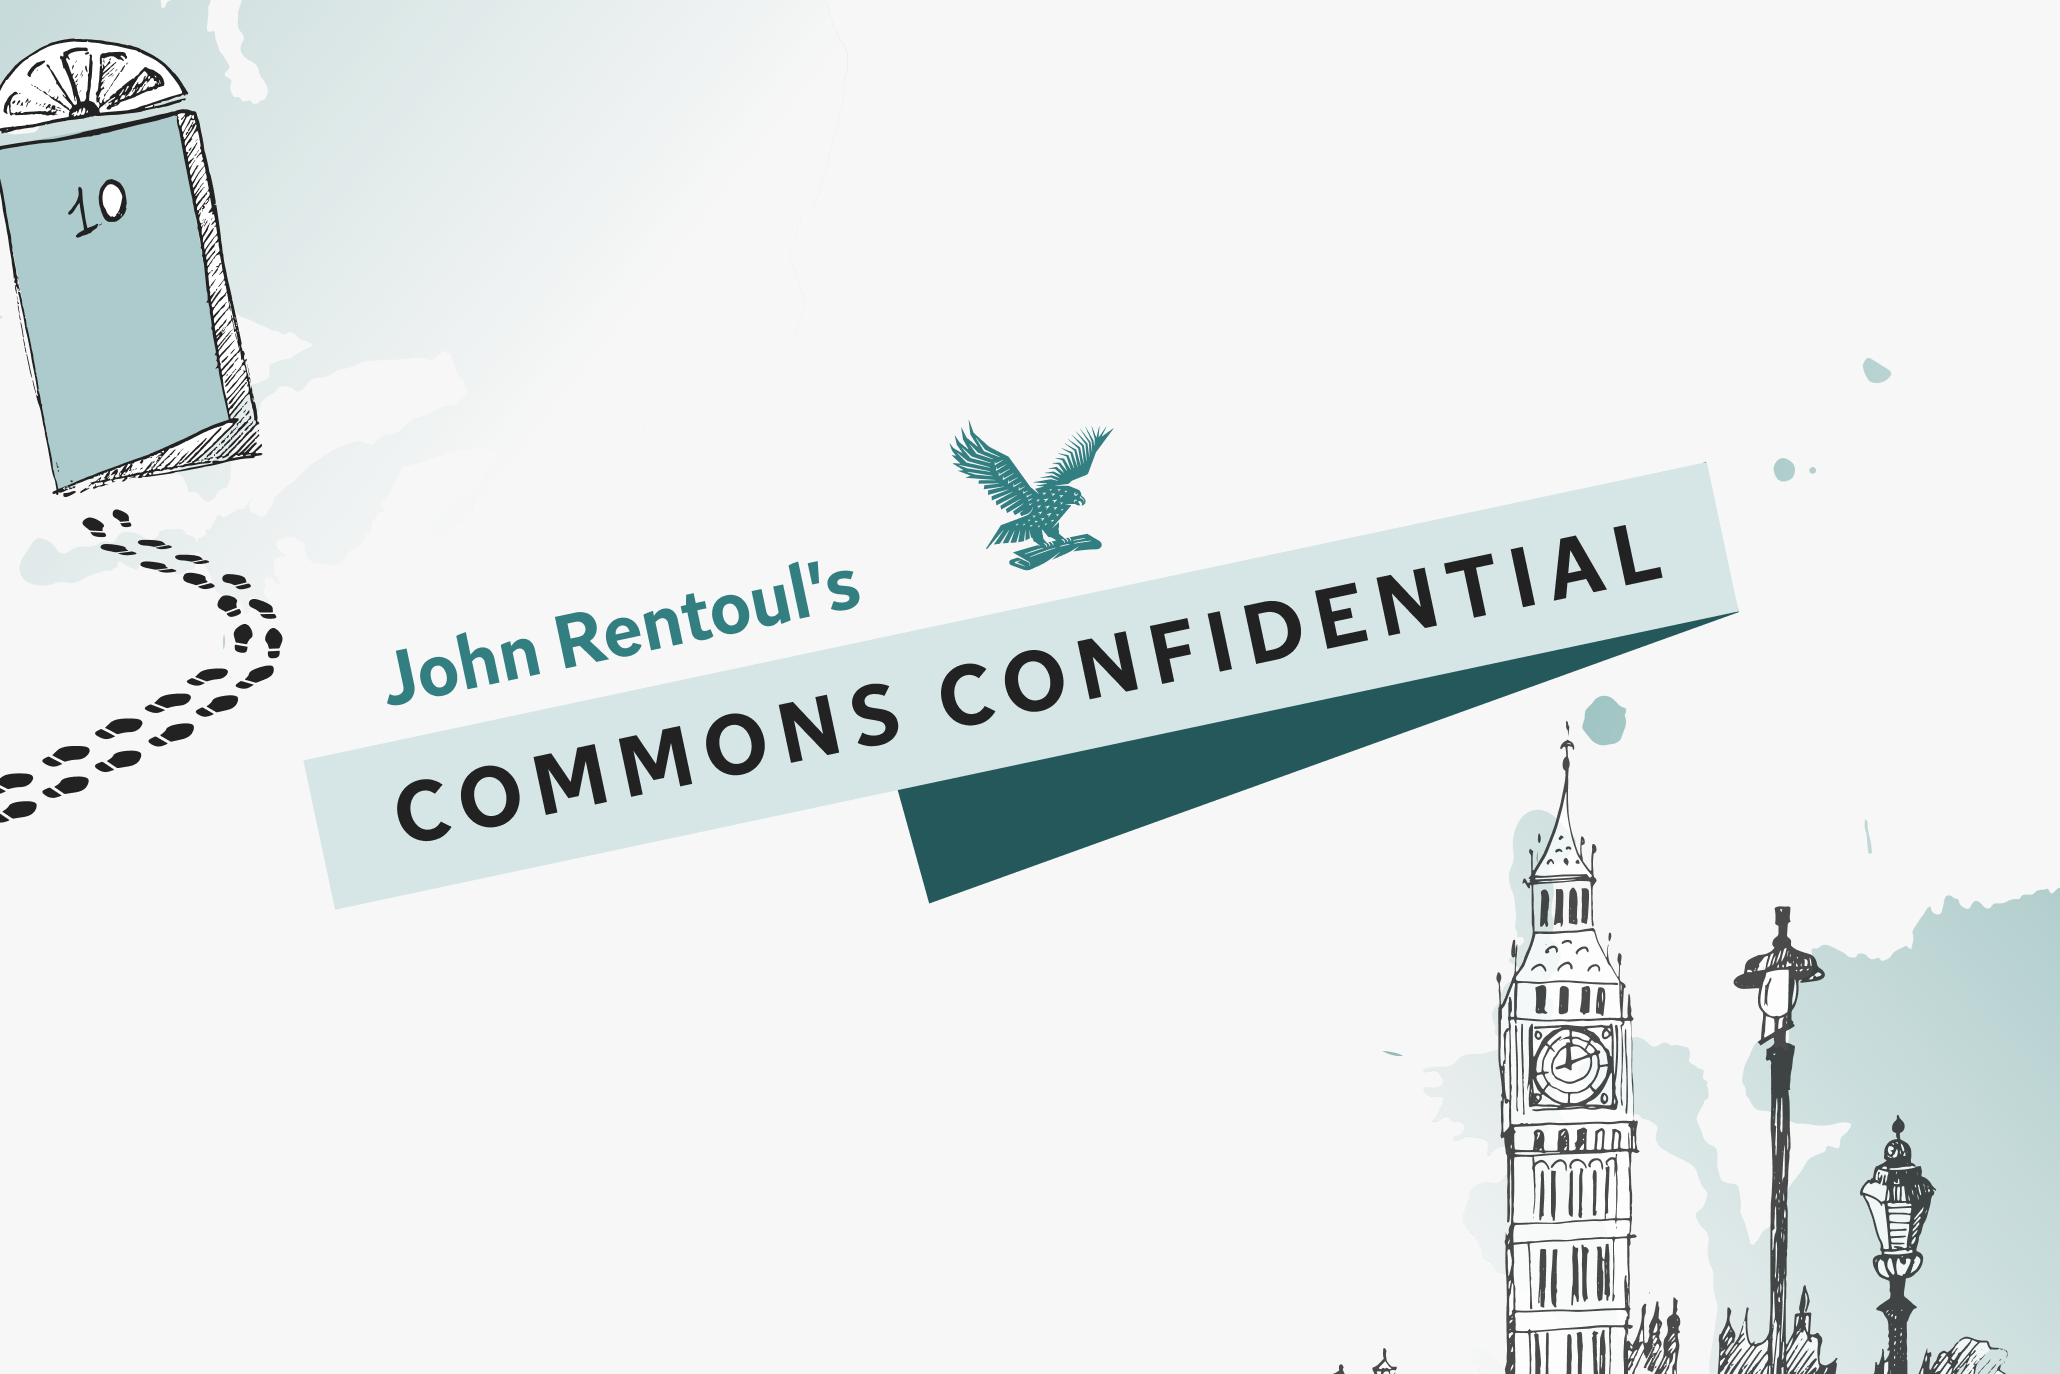 John Rentoul’s Commons Confidential